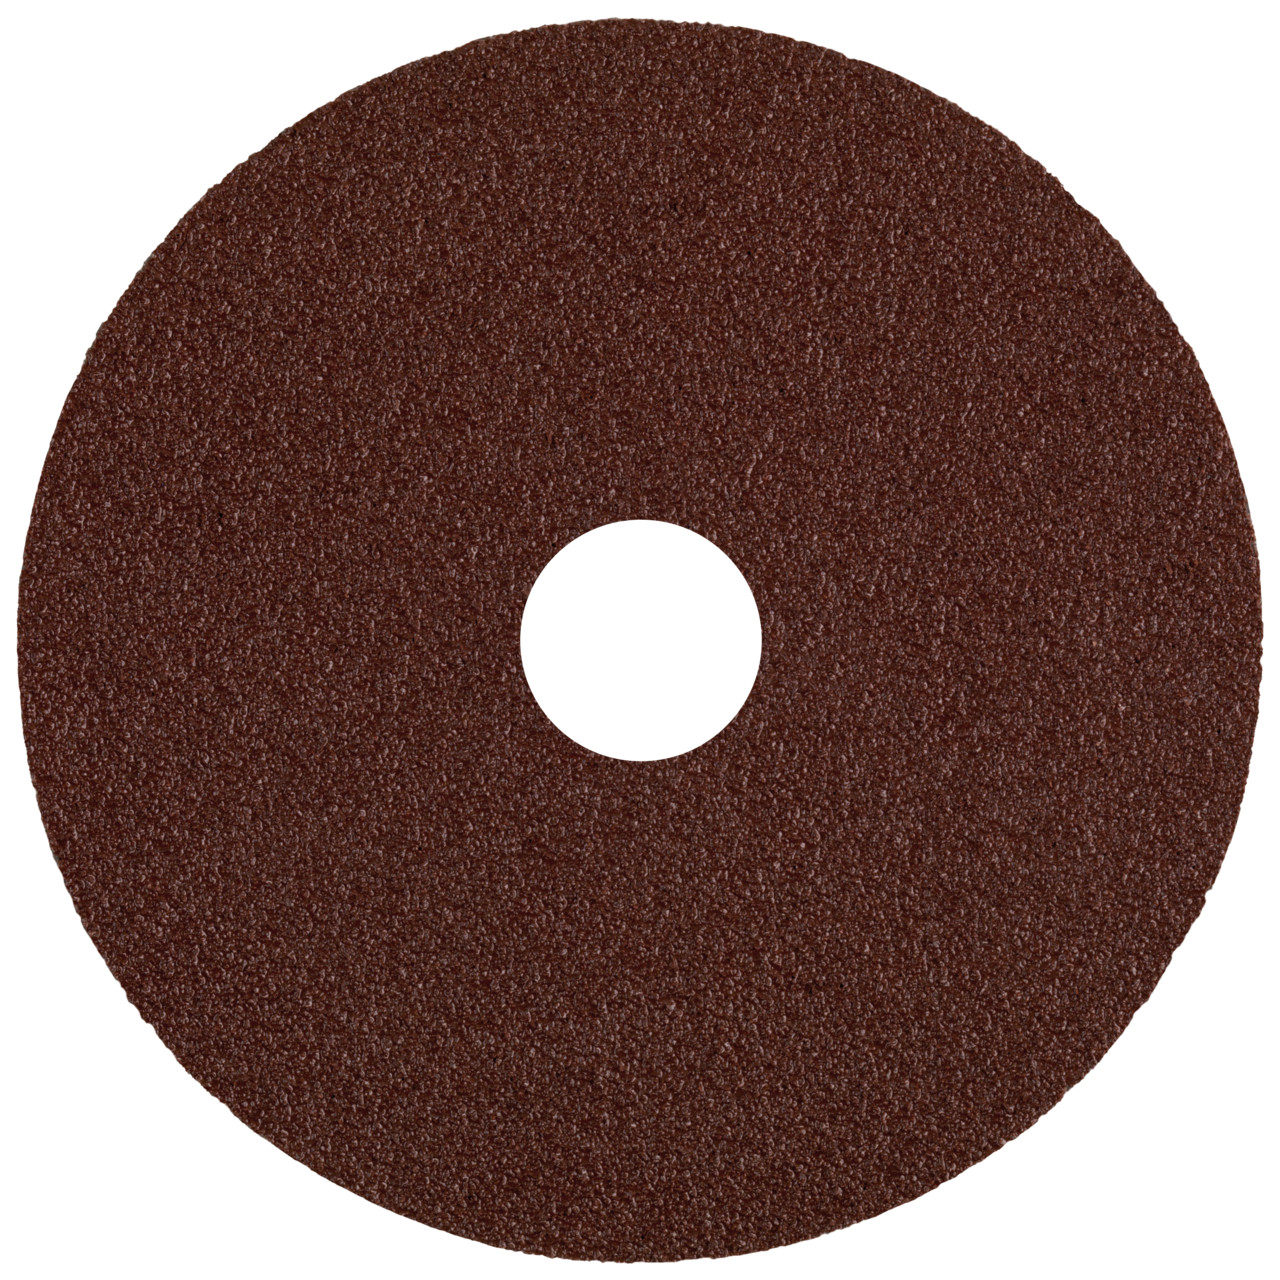 Tyrolit A-B02 V Vulcanised fibre disc DxH 125x22 For steel, non-ferrous metals and wood, P24, shape: DISC, Art. 34286499